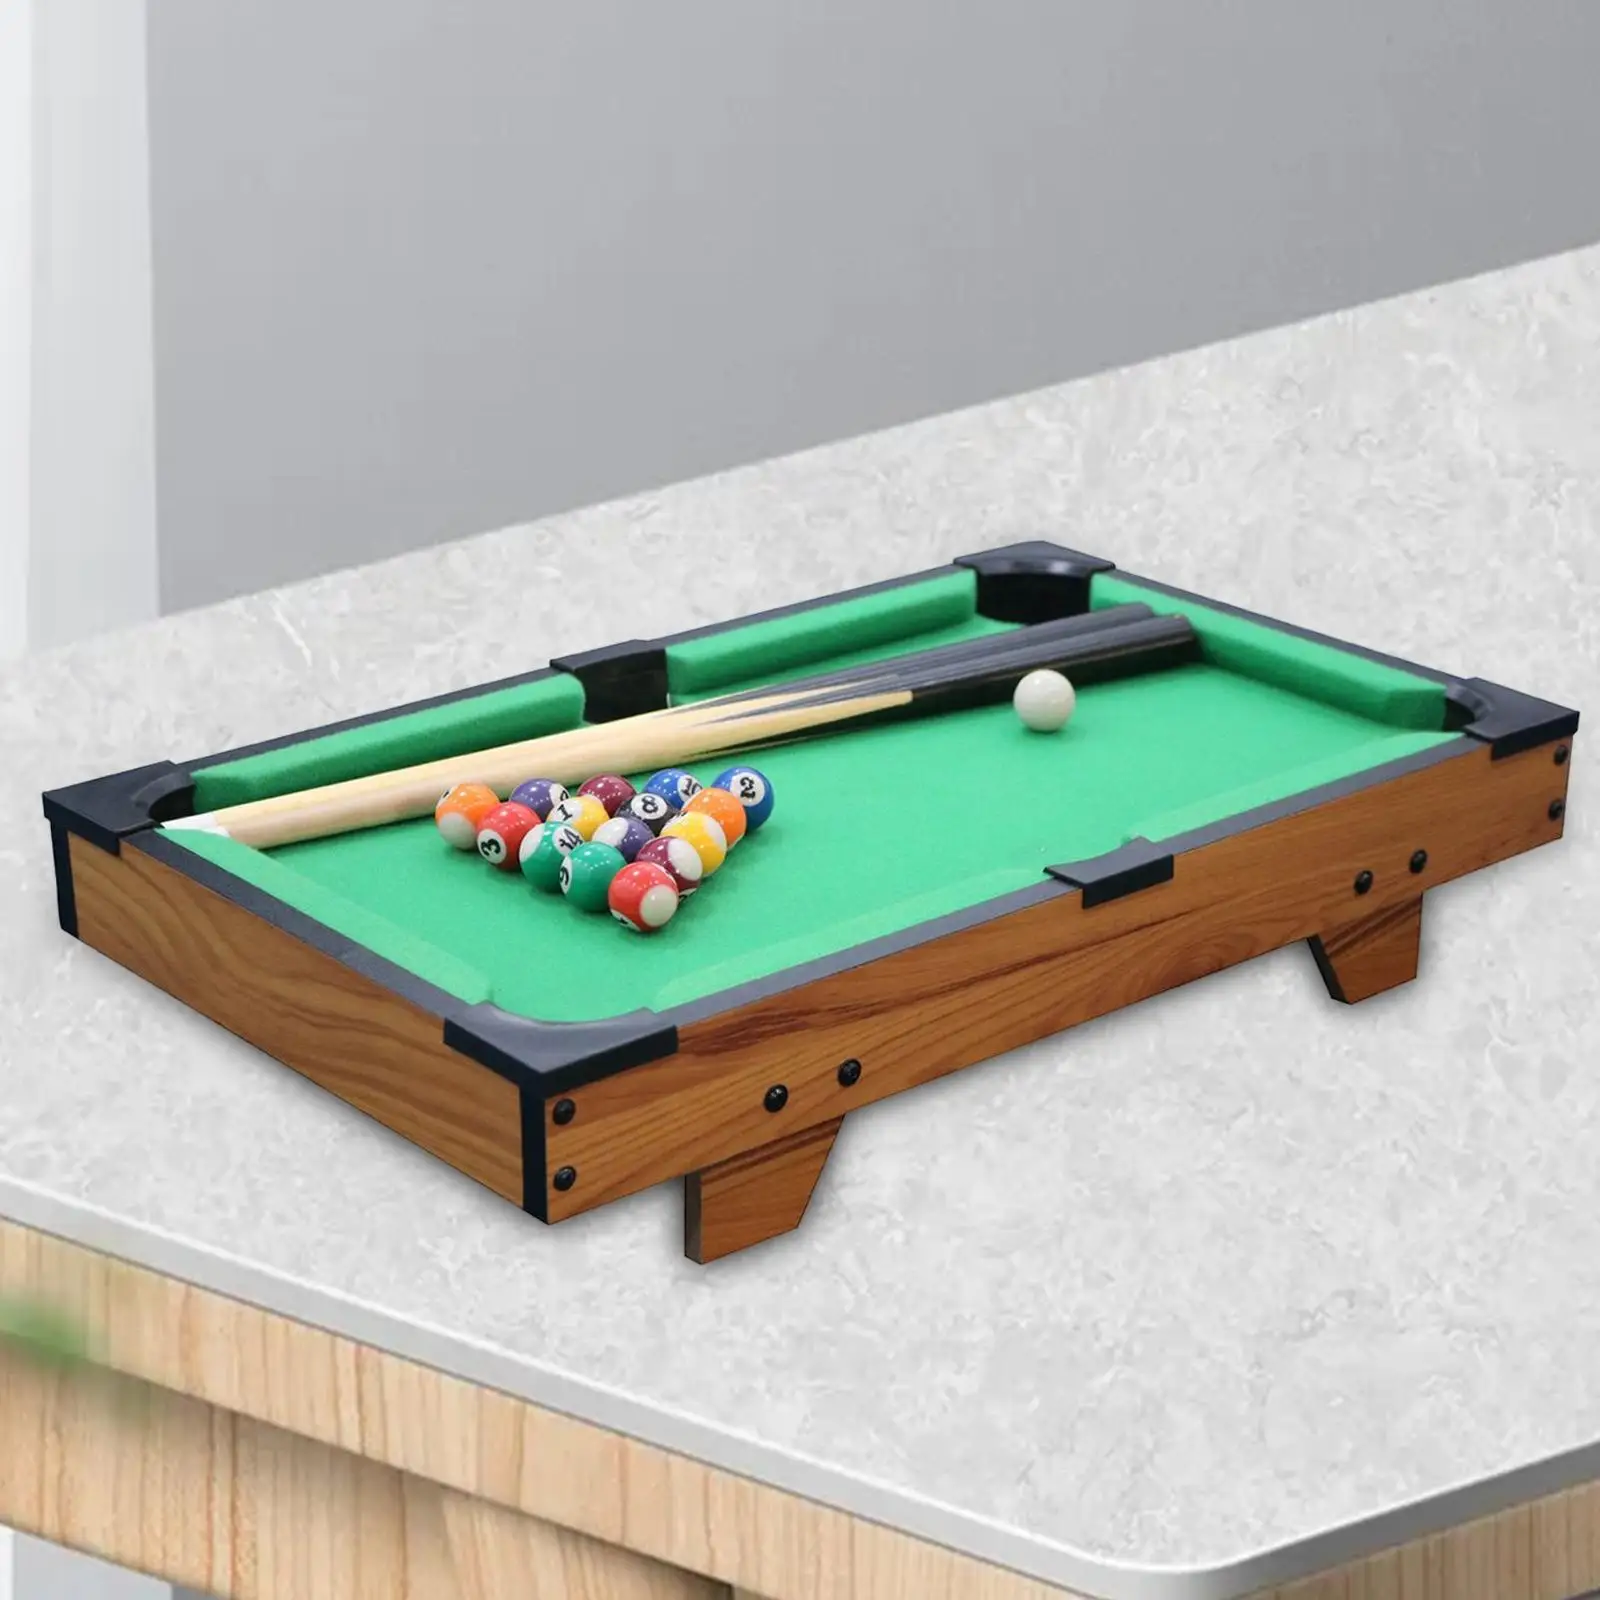 Mini Table pool Colorful Balls Felt Surface Game Set Educational Snooker Billiards Toy for Desktop Desk Sports Family Travel